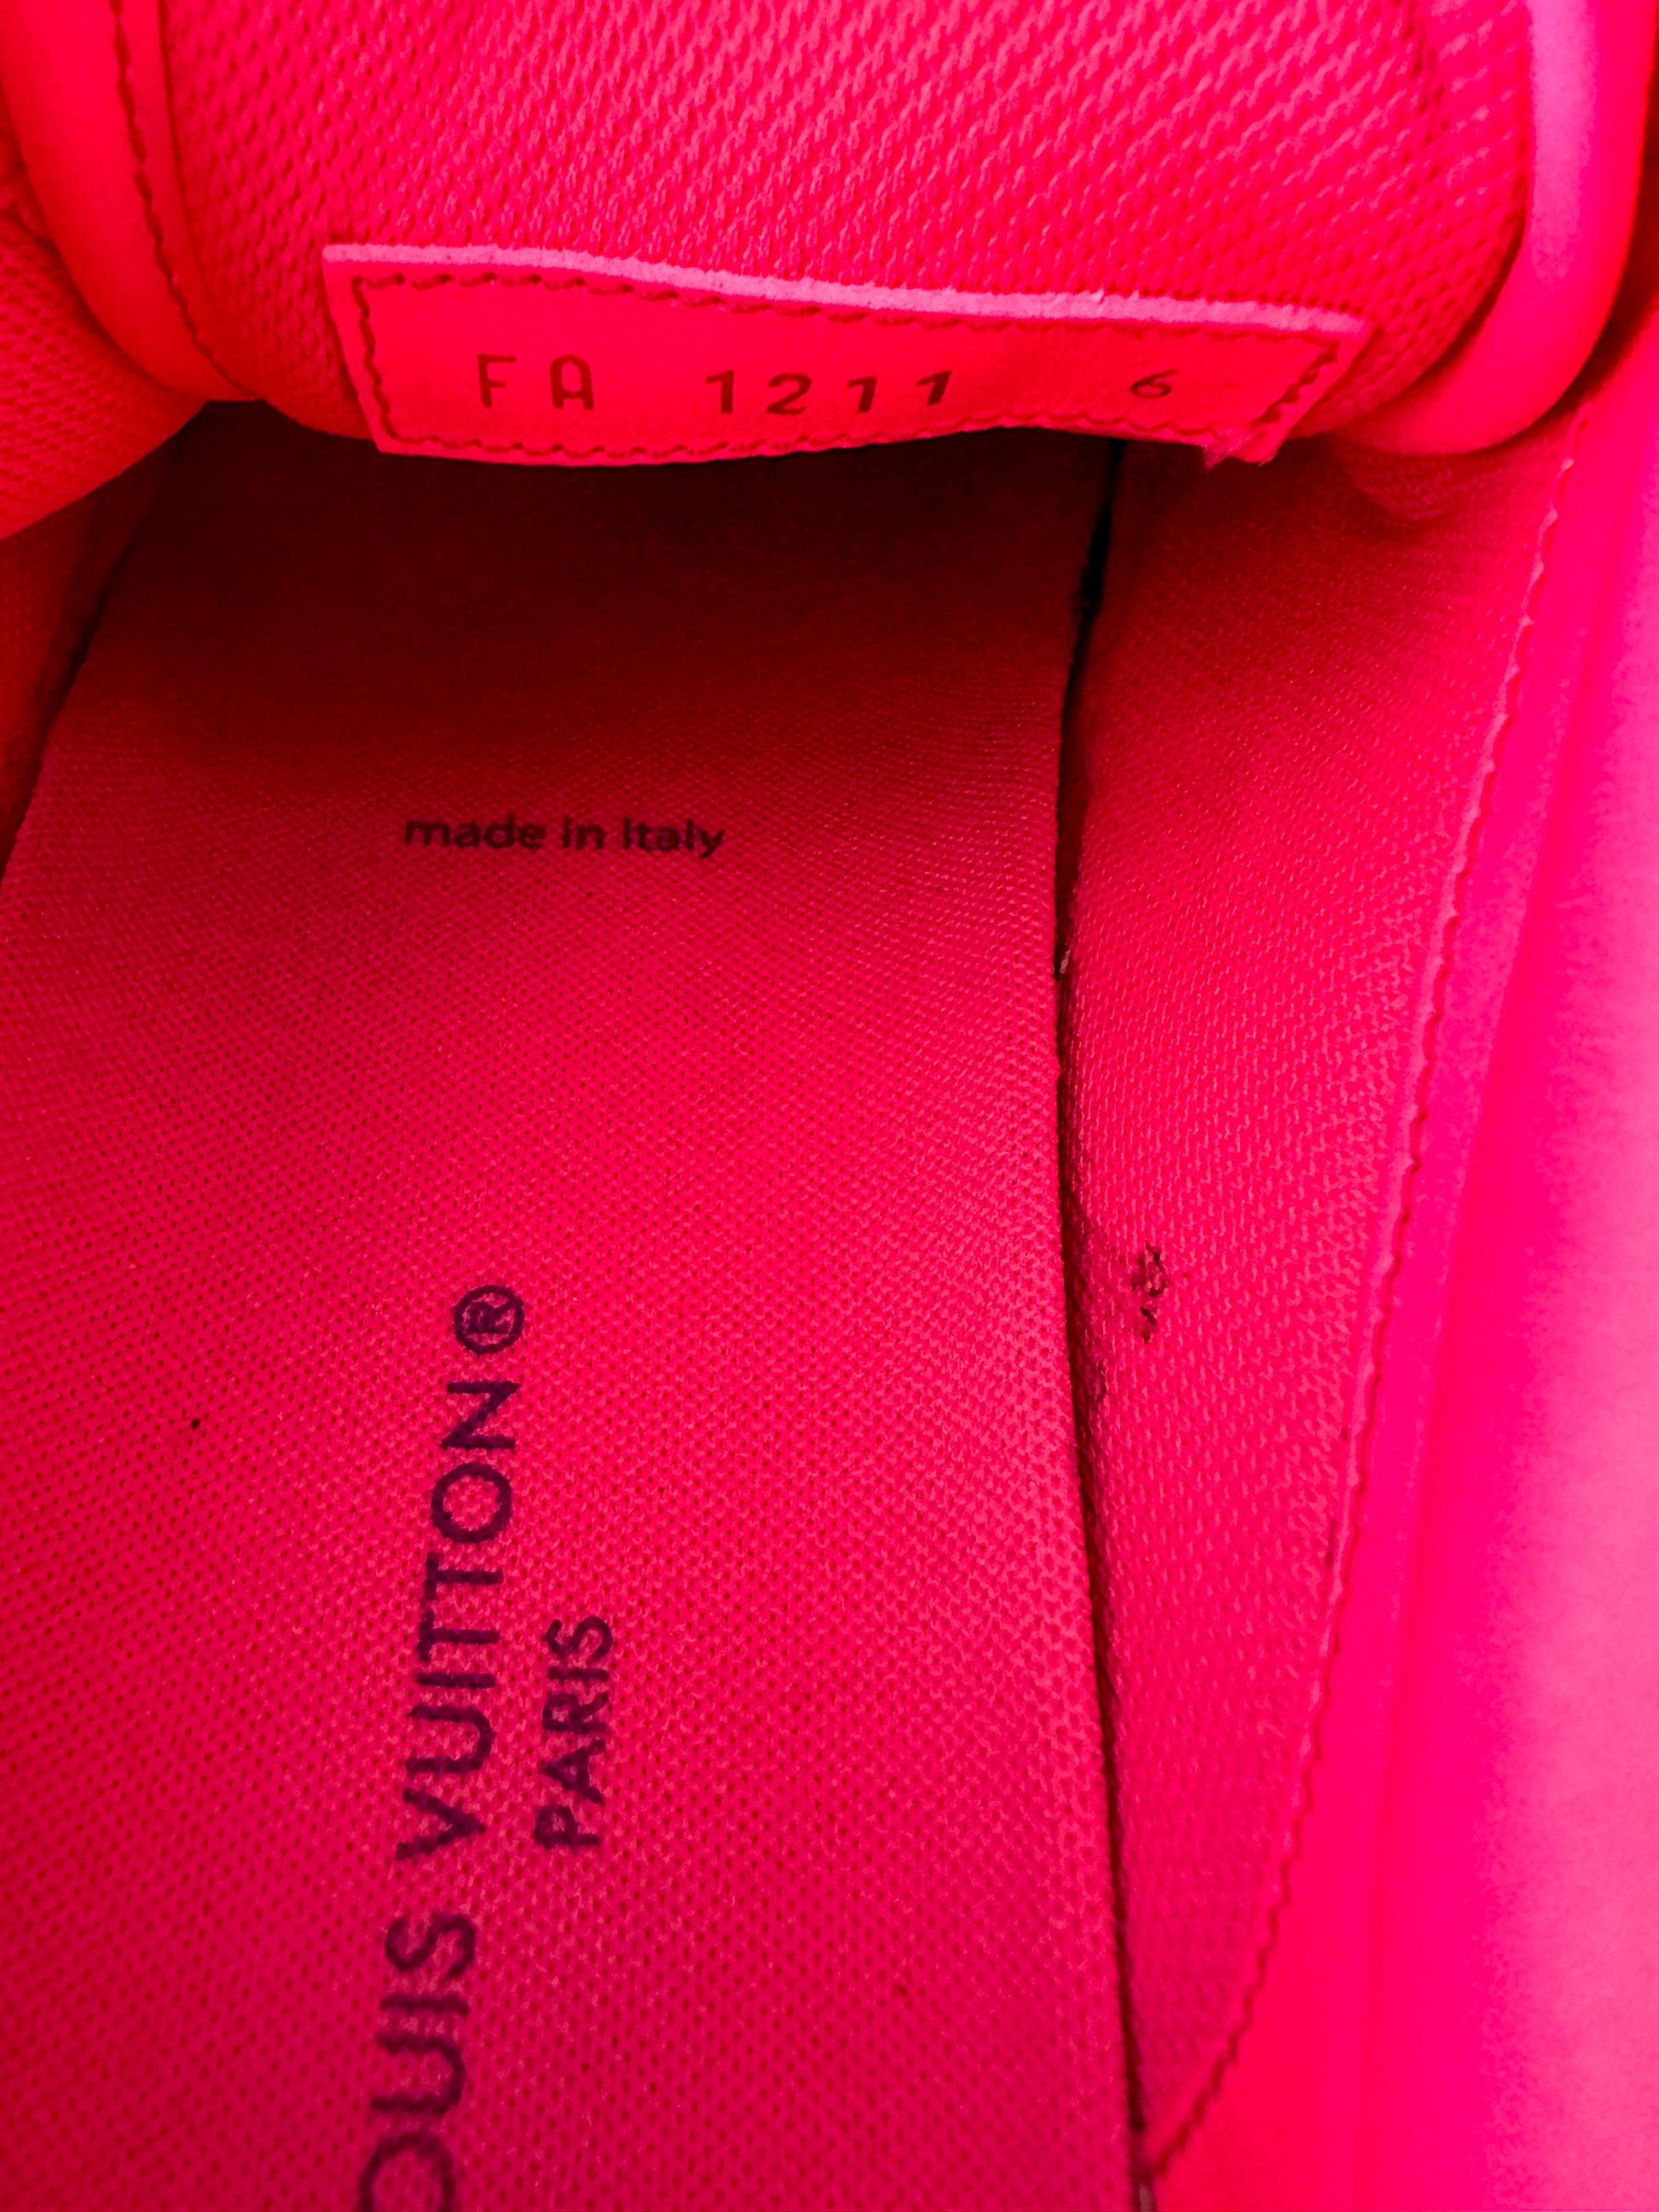 Louis Vuitton Monogram Gradient Ollie Sneakers